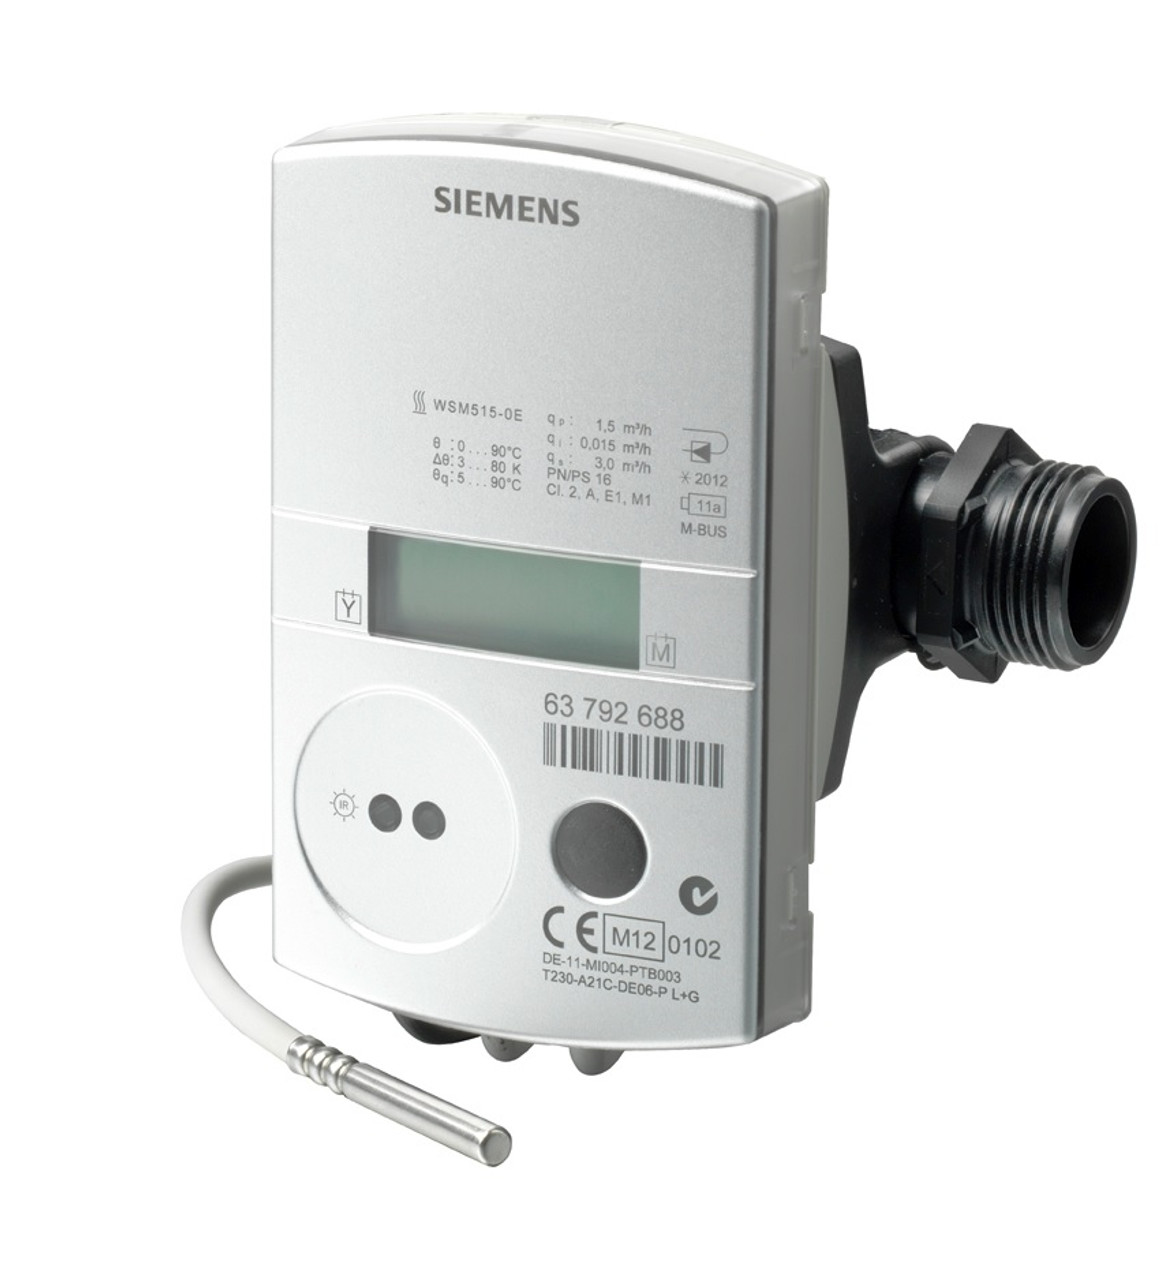 Siemens WSM506-FE, Ultrasonic heat meter